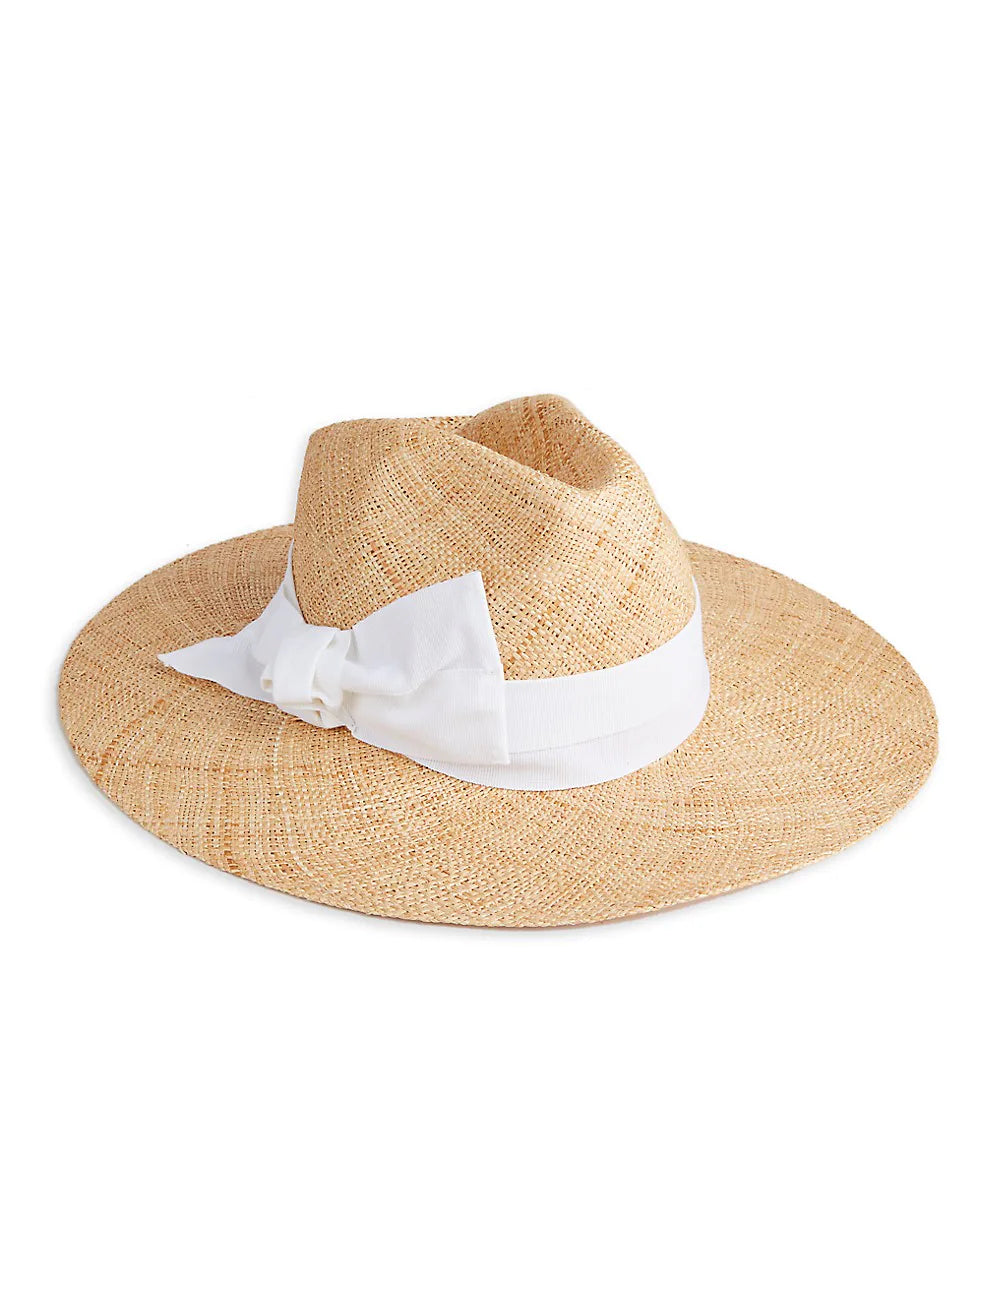 Bettini Straw Fedora hat with white bow